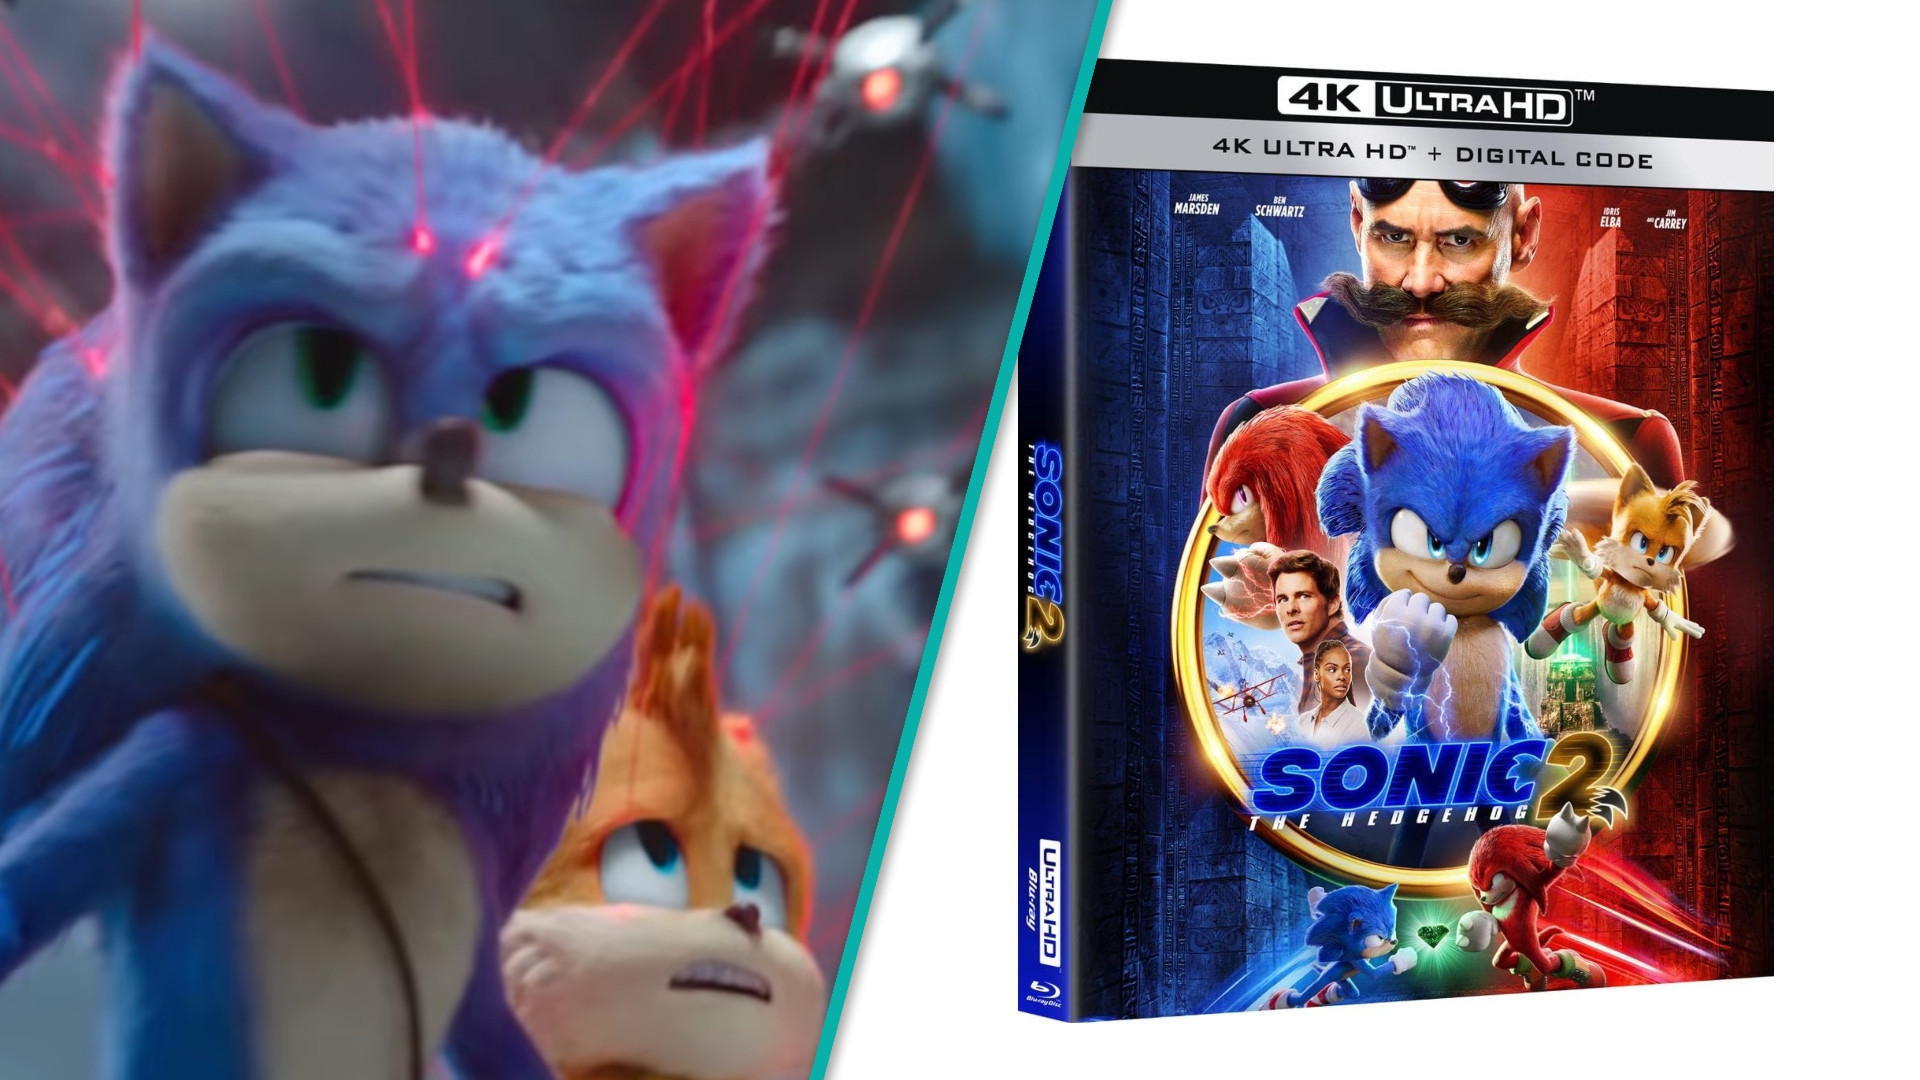 Sonic The Hedgehog 2 [DVD]